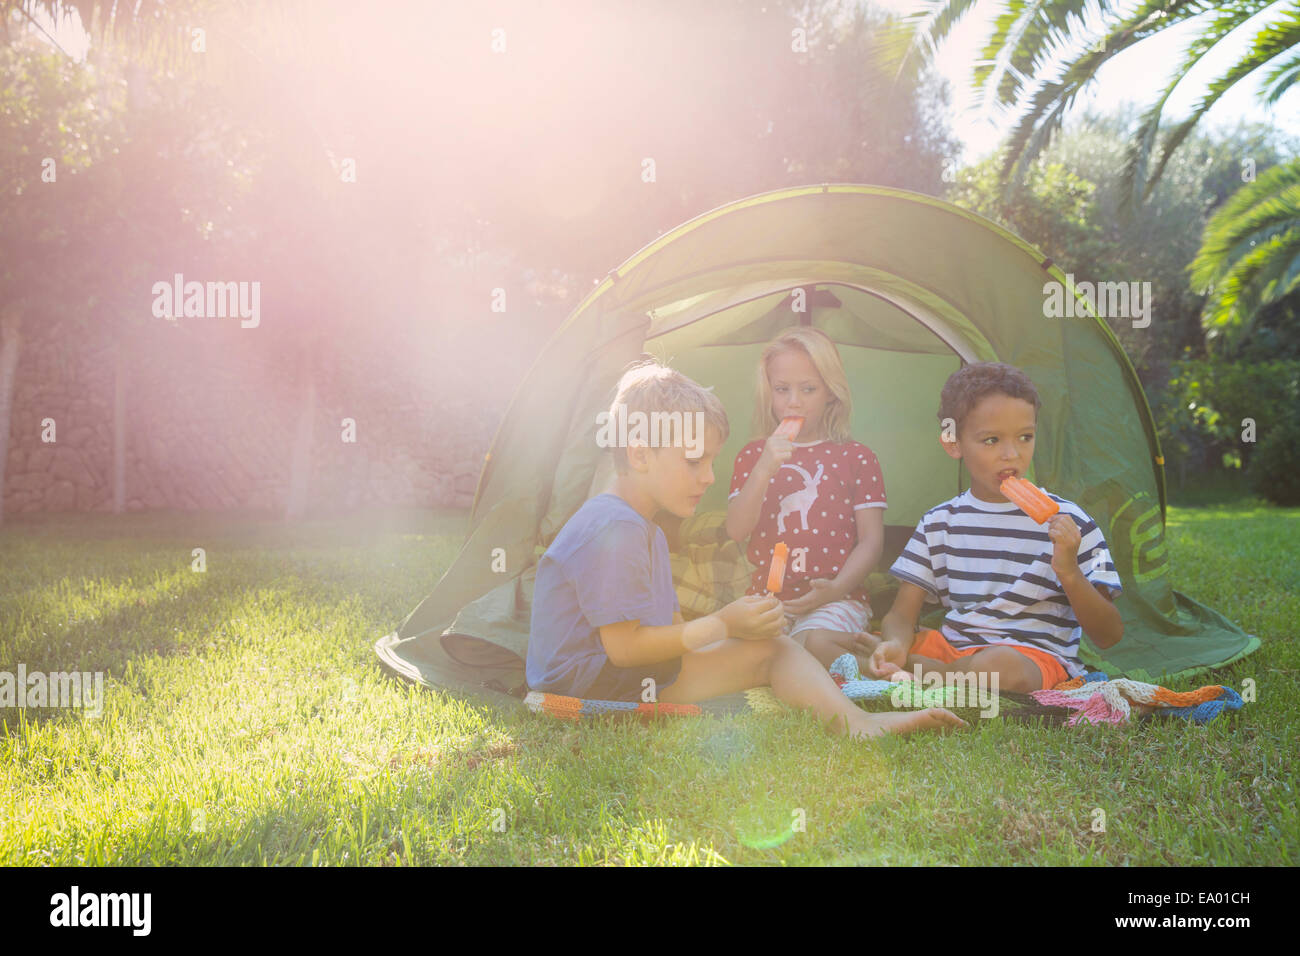 Three children eating ice lollies in garden tent Stock Photo